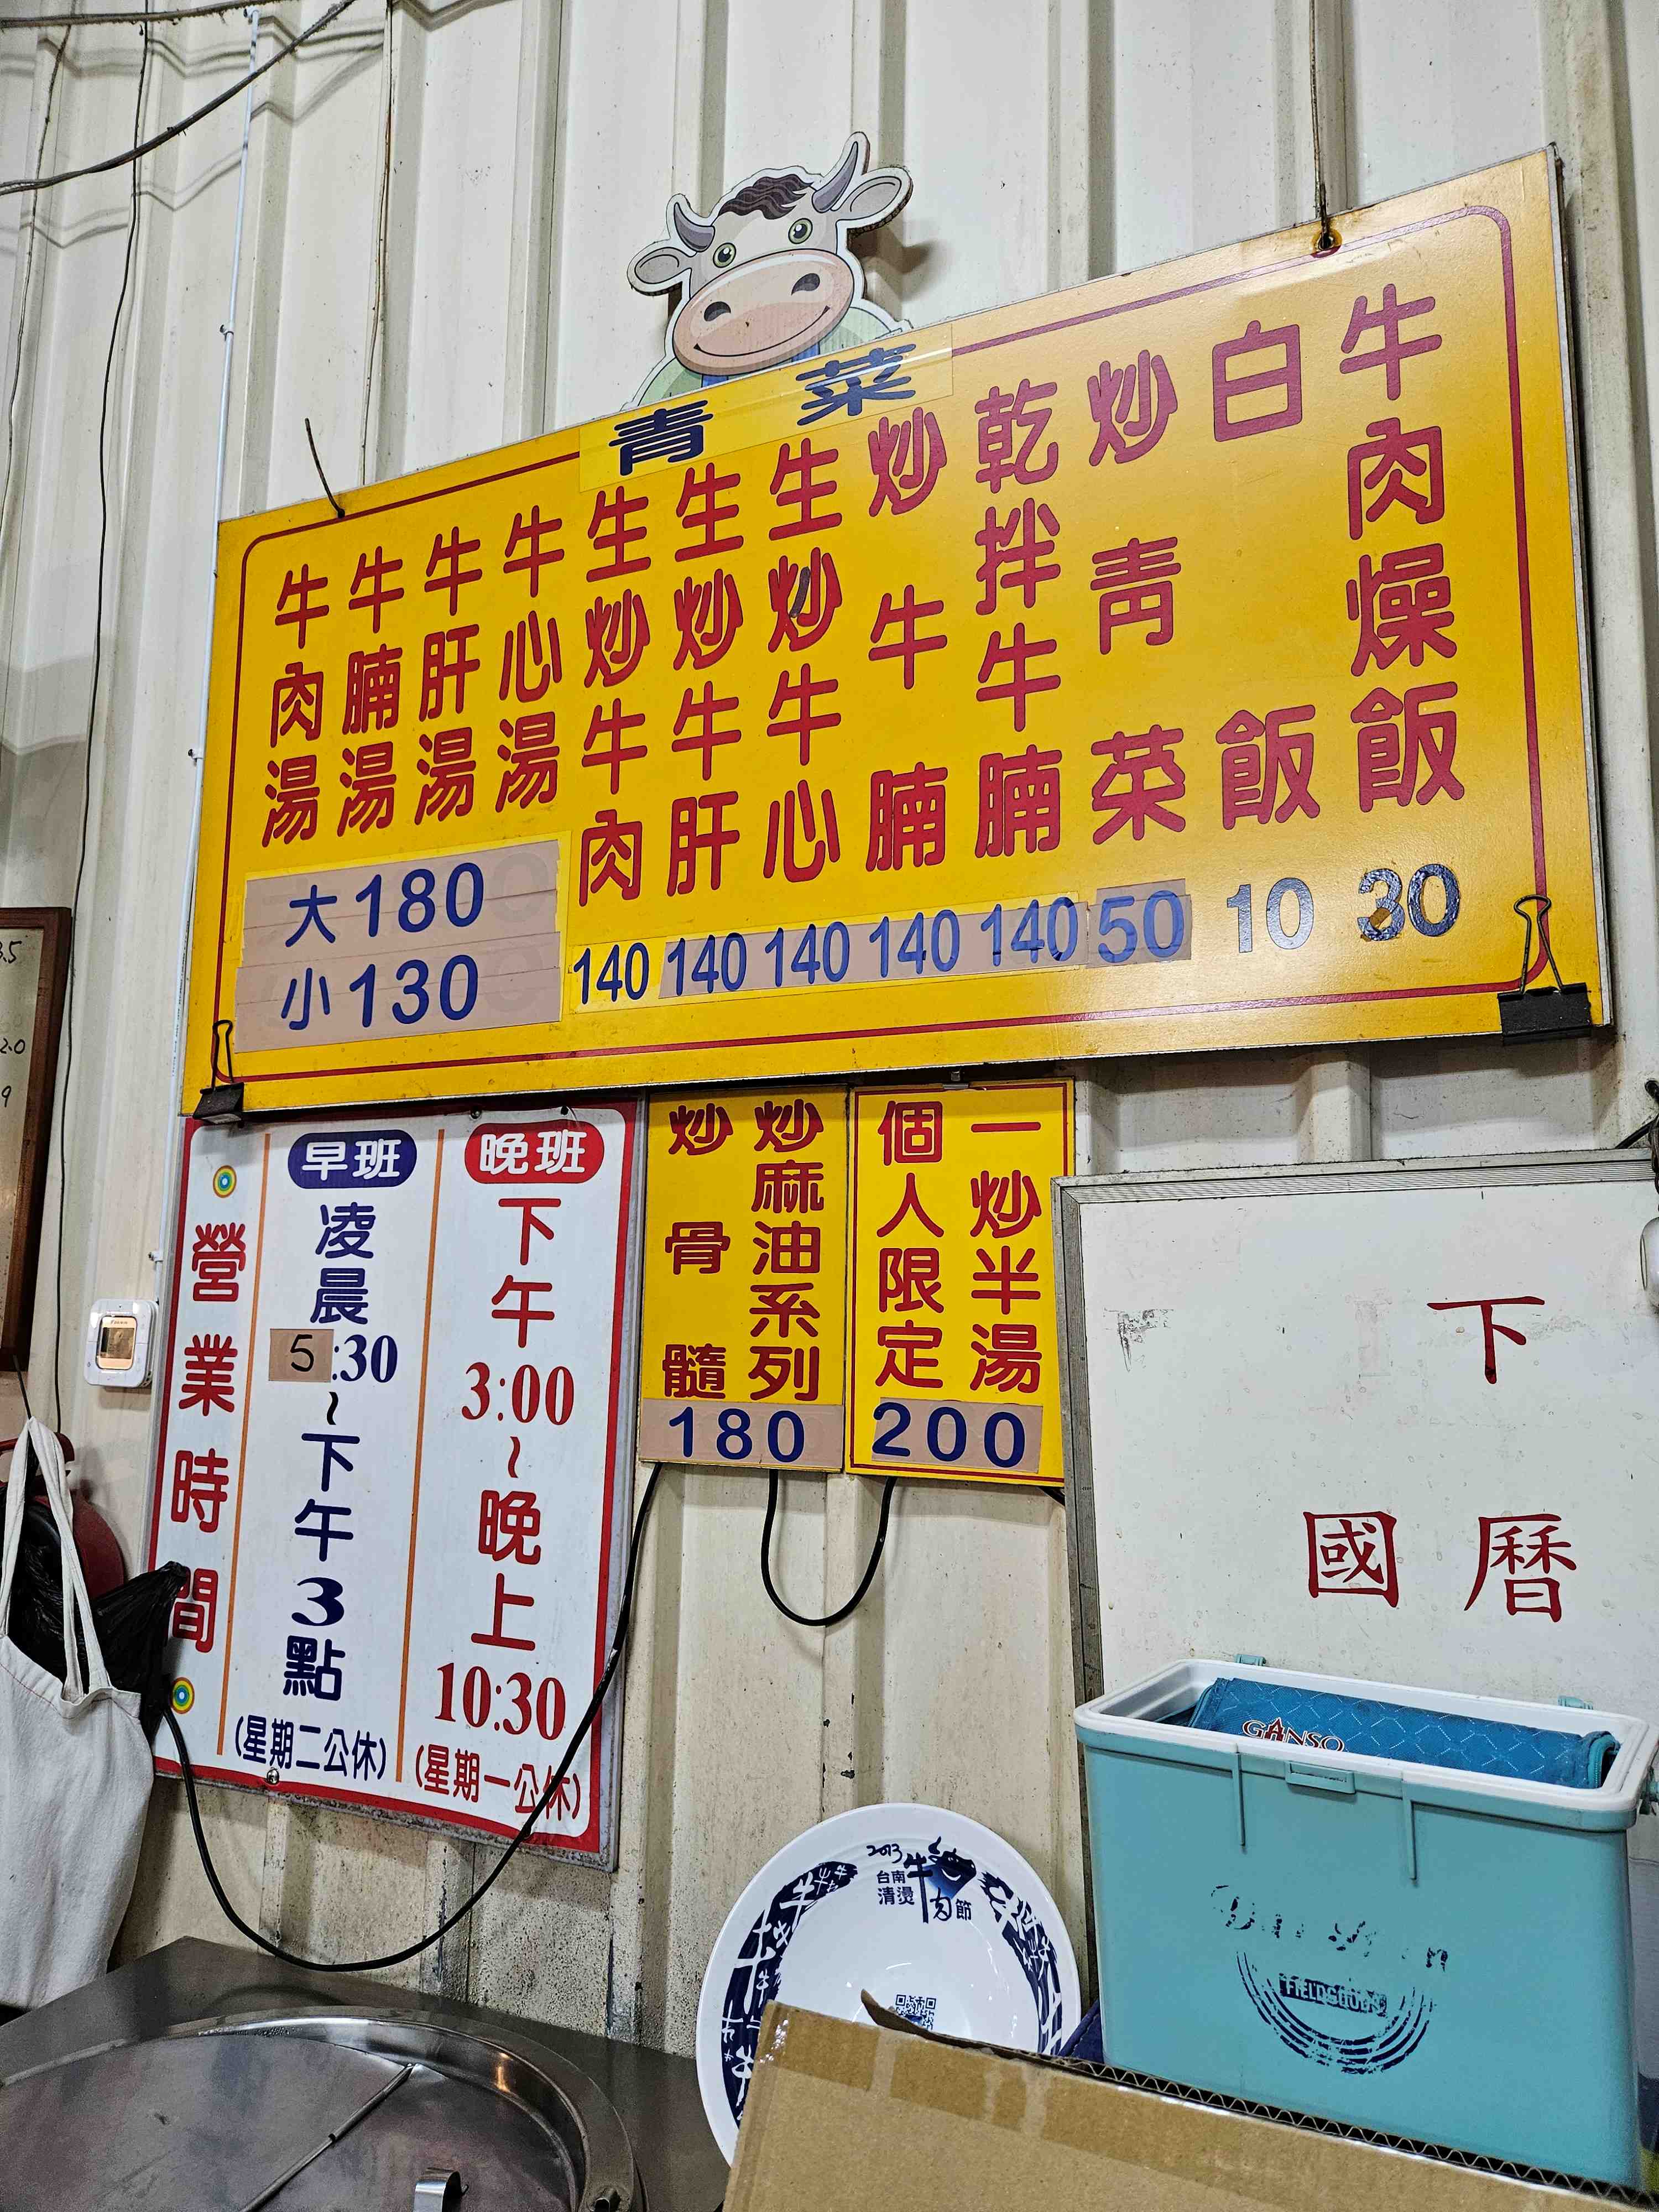 Kangle Street Beef Soup (康樂街牛肉湯) 메뉴판. 메뉴가 모두 한자로 되어 있어서 중국어를 못 한다면 구글 지도에 있는 사진 이미지로 사장님께 주문하면 됩니다.